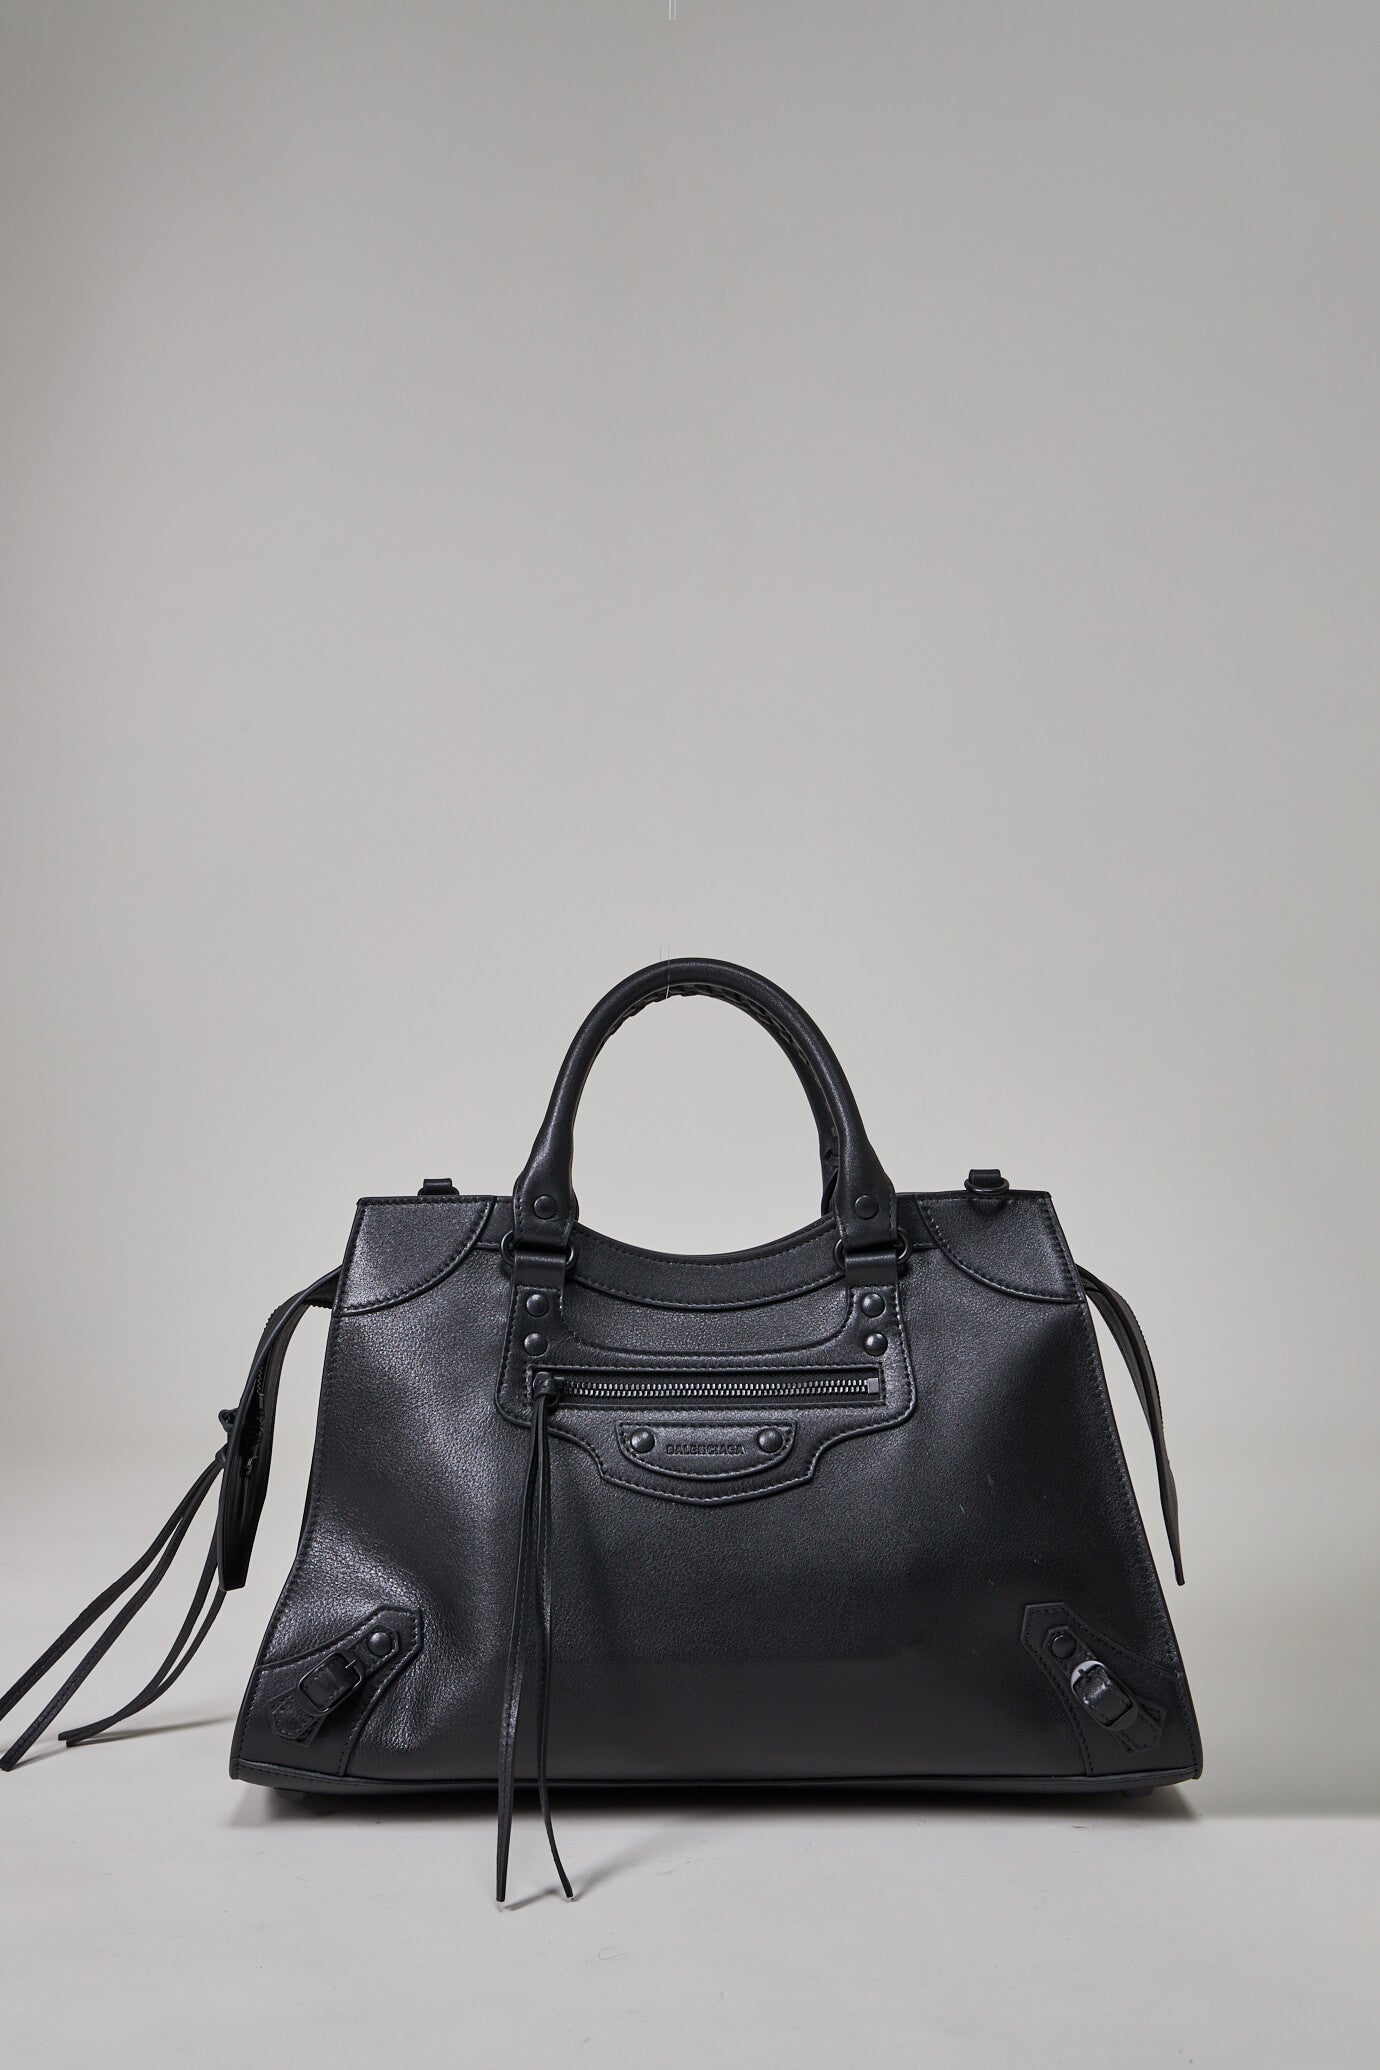 Balenciaga Classic City Bag, Black